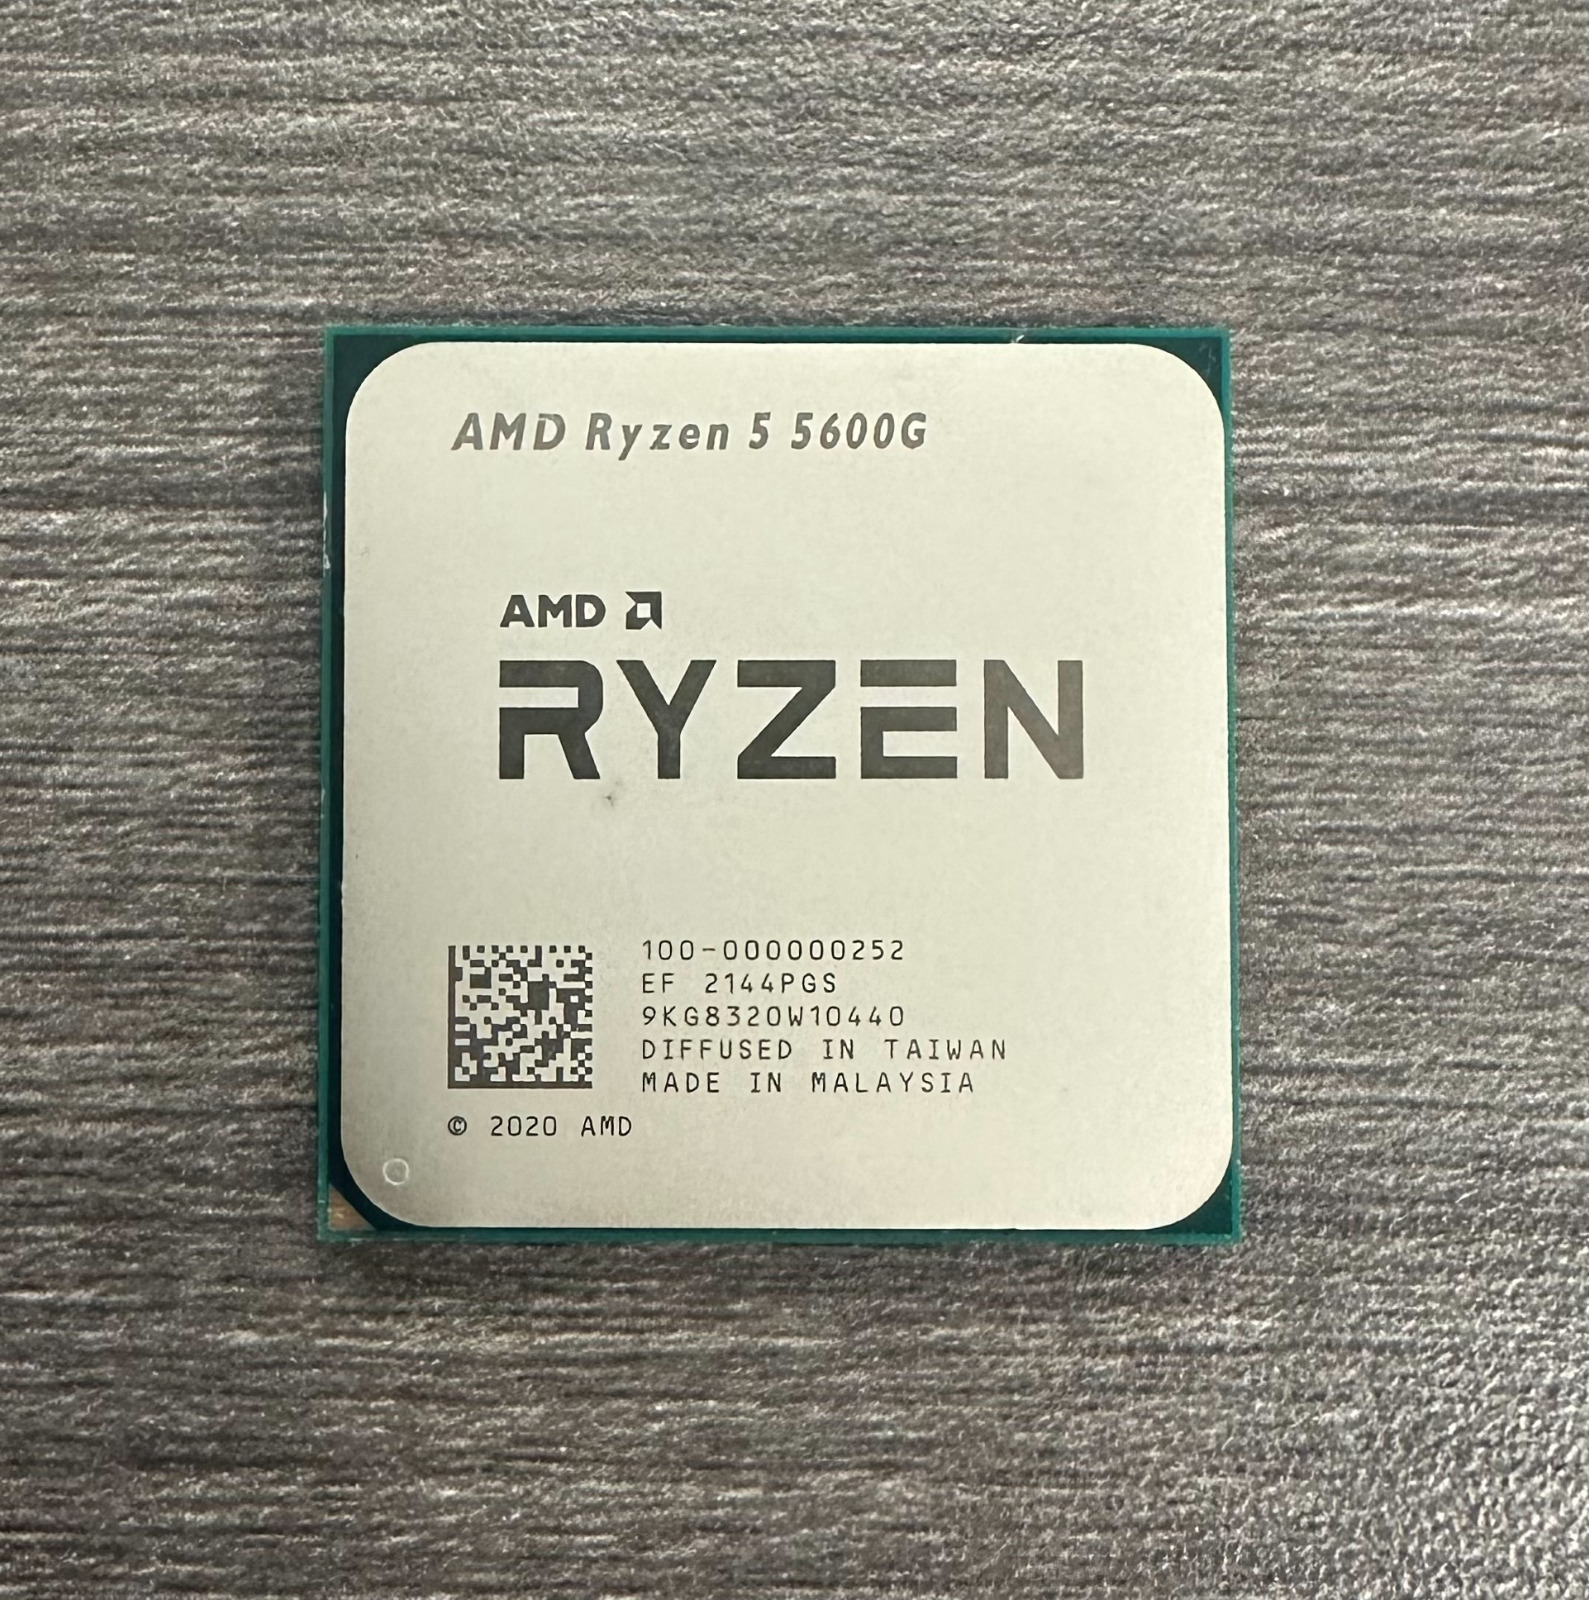 AMD Ryzen 5 5600G 6-Core 12-Thread Desktop Processor with Radeon